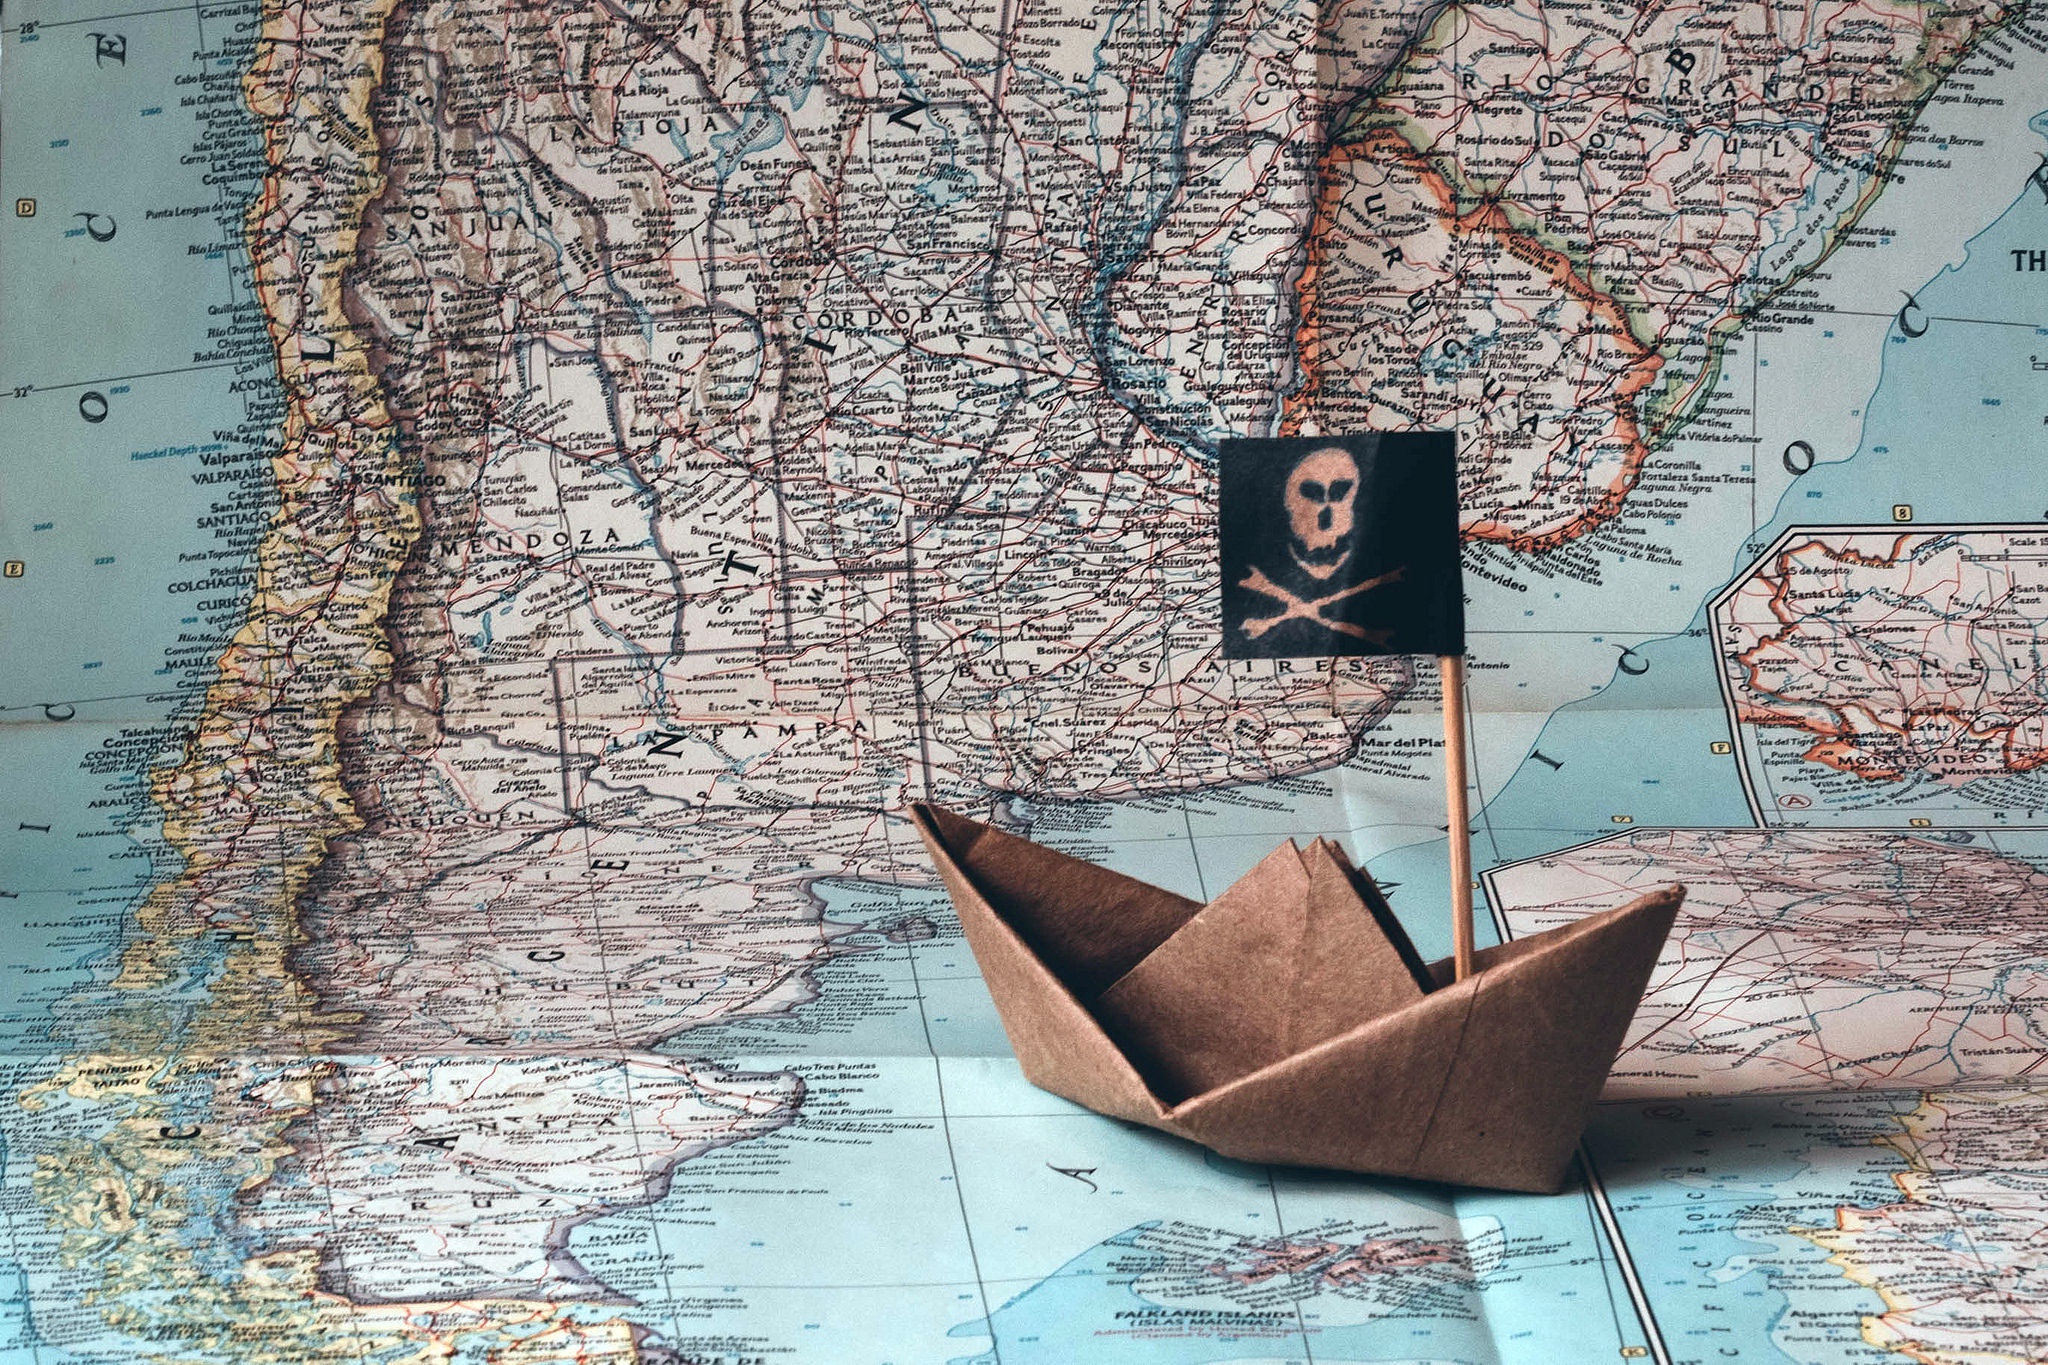 man made, origami, map, paper boat, paper, pirate